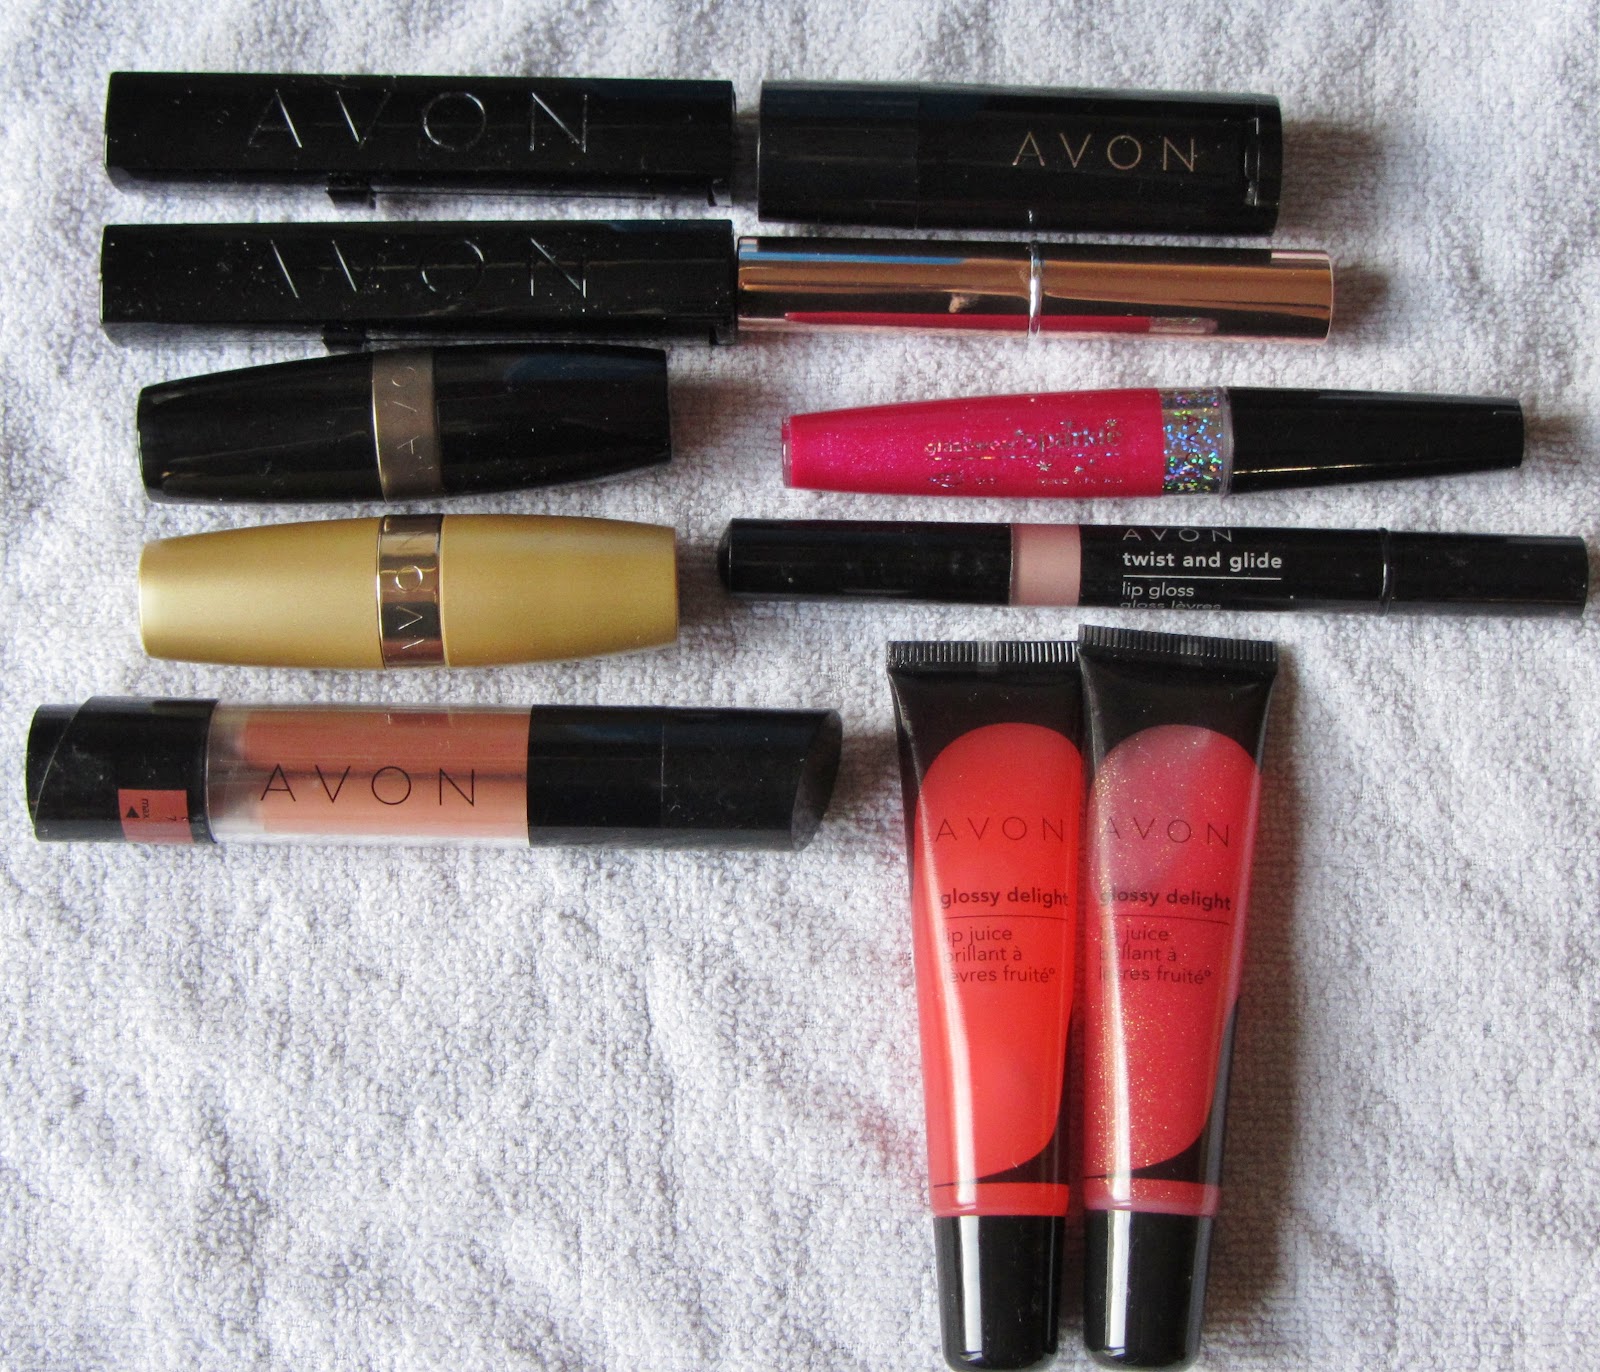 Nina's Bargain Beauty*: My Avon Lipstick & Lipgloss Collection Review